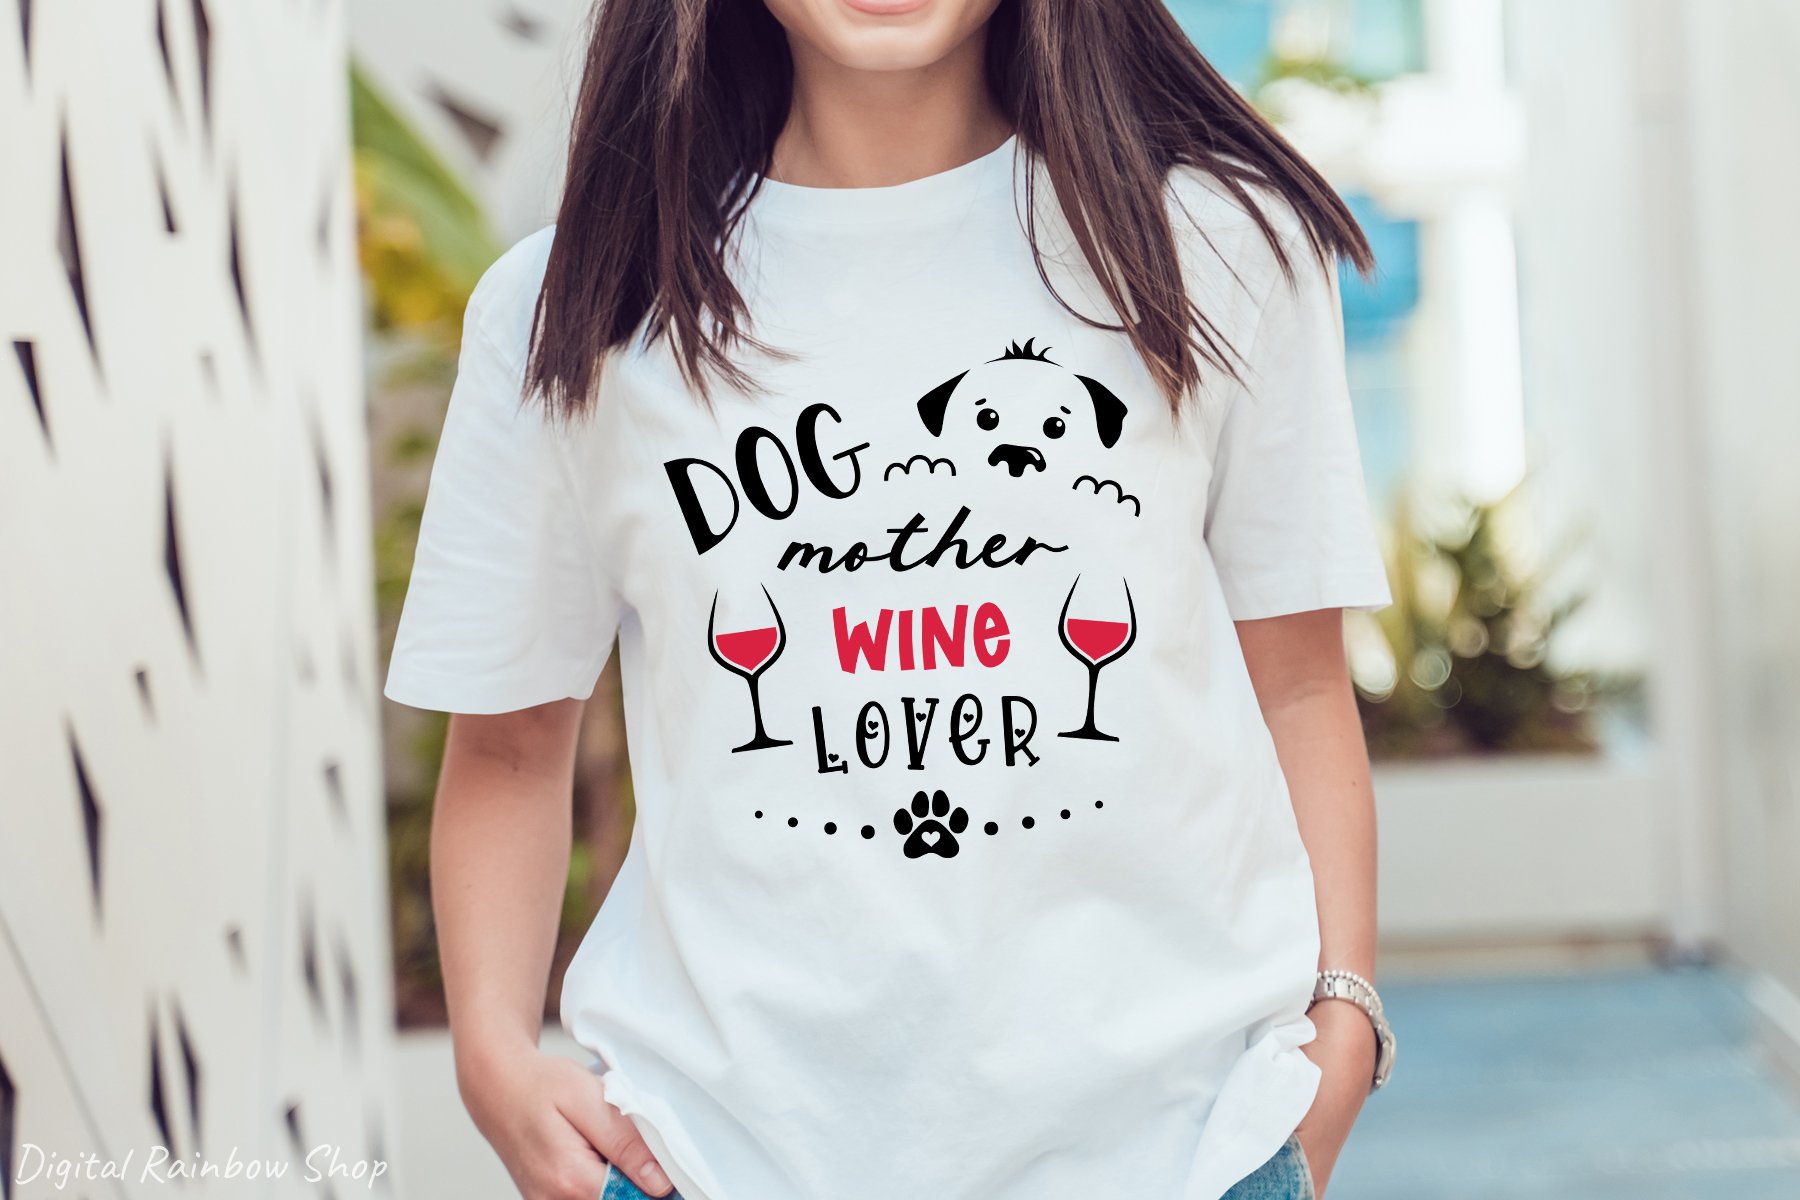 Full of love wine spirits.